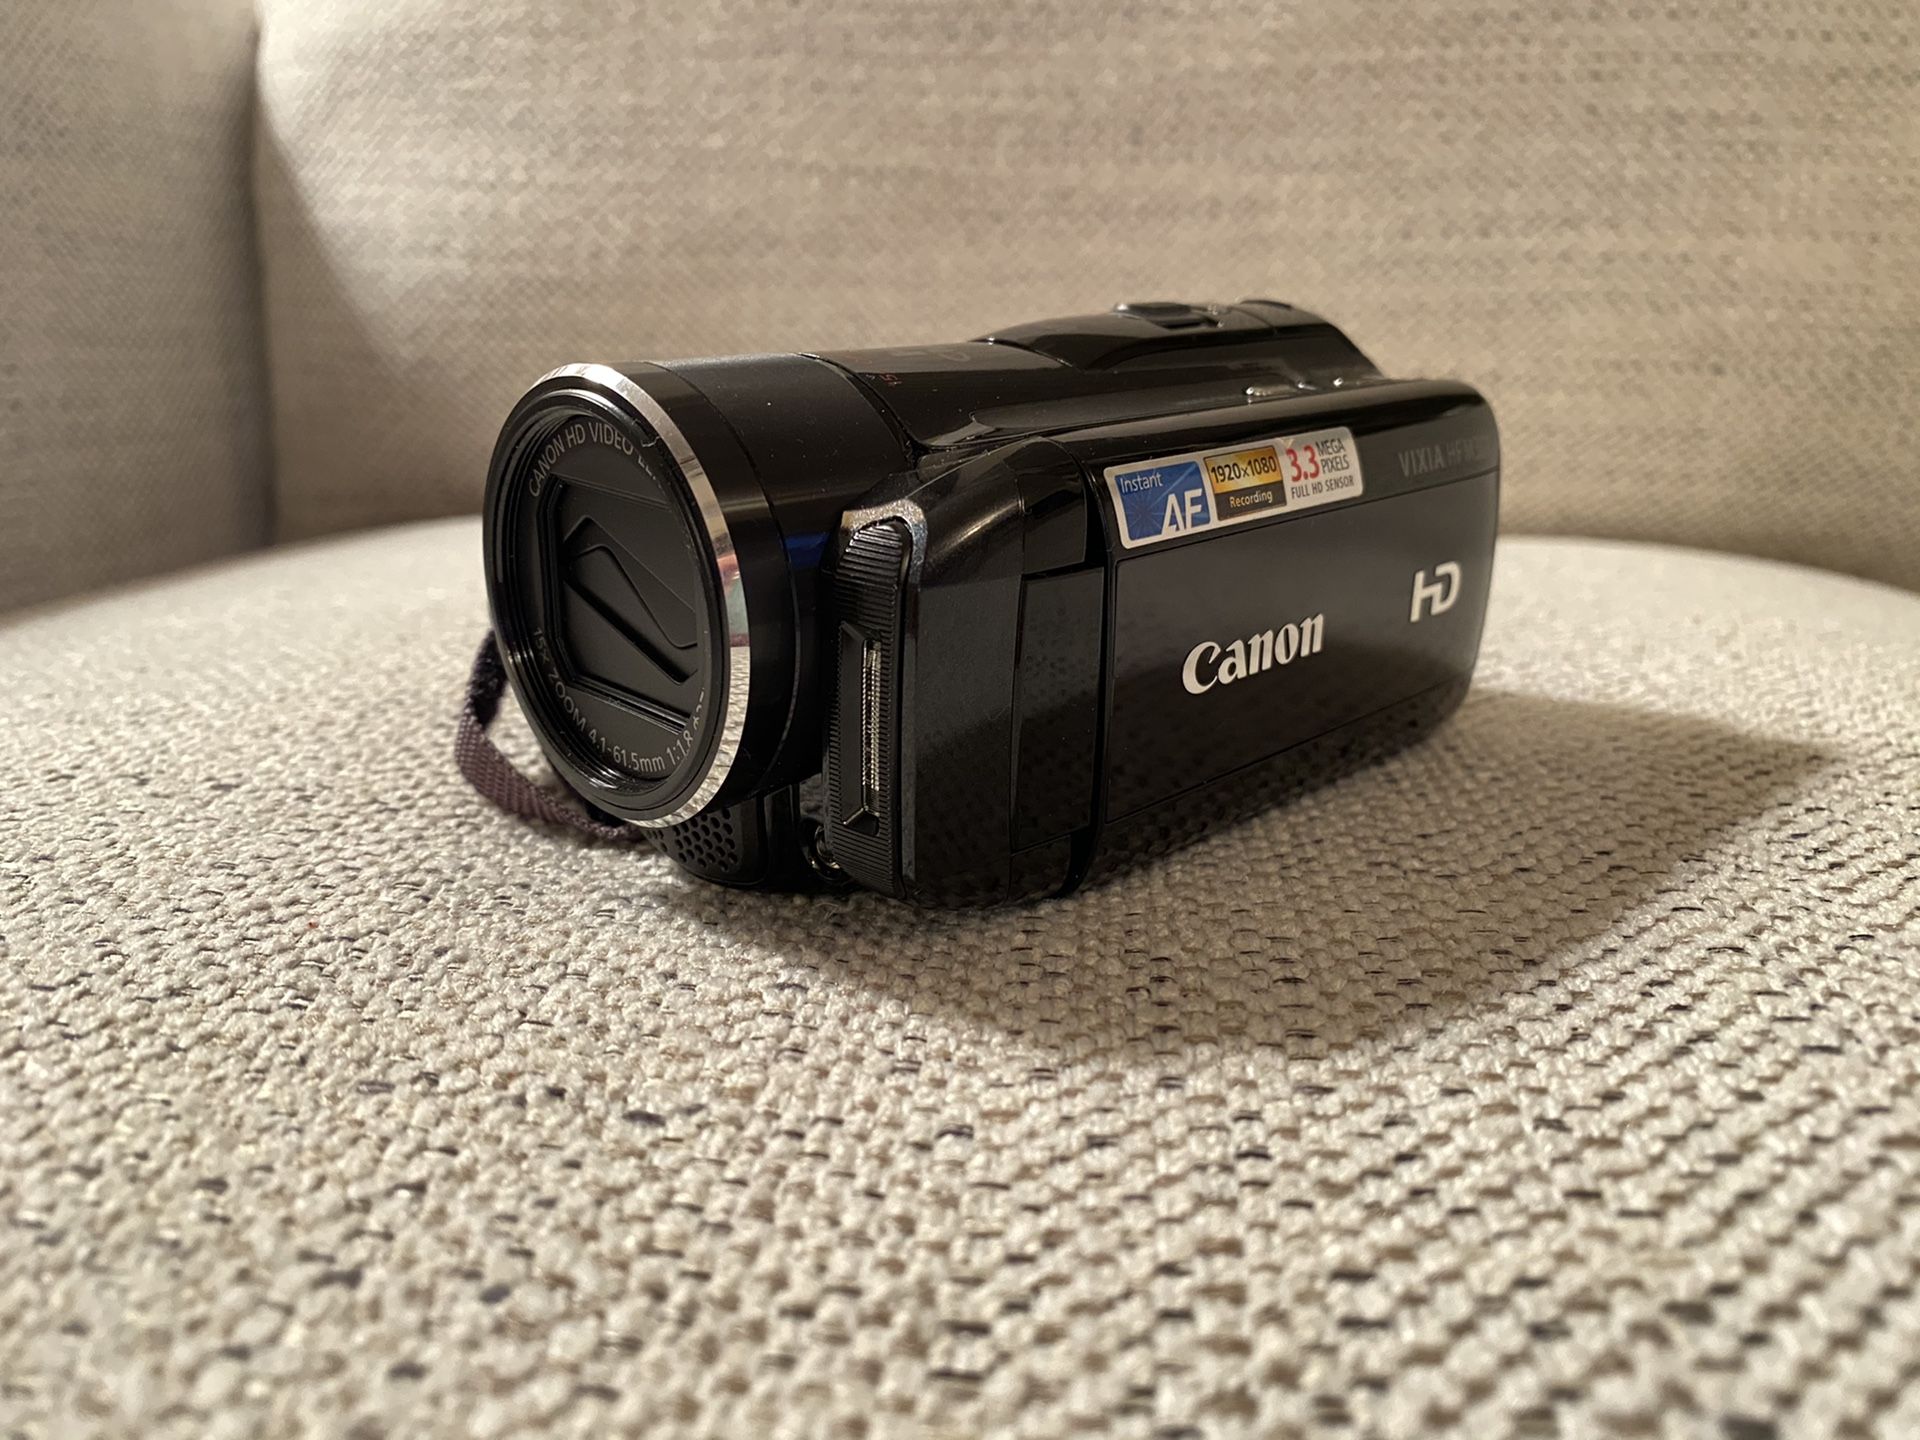 Canon digital camcorder